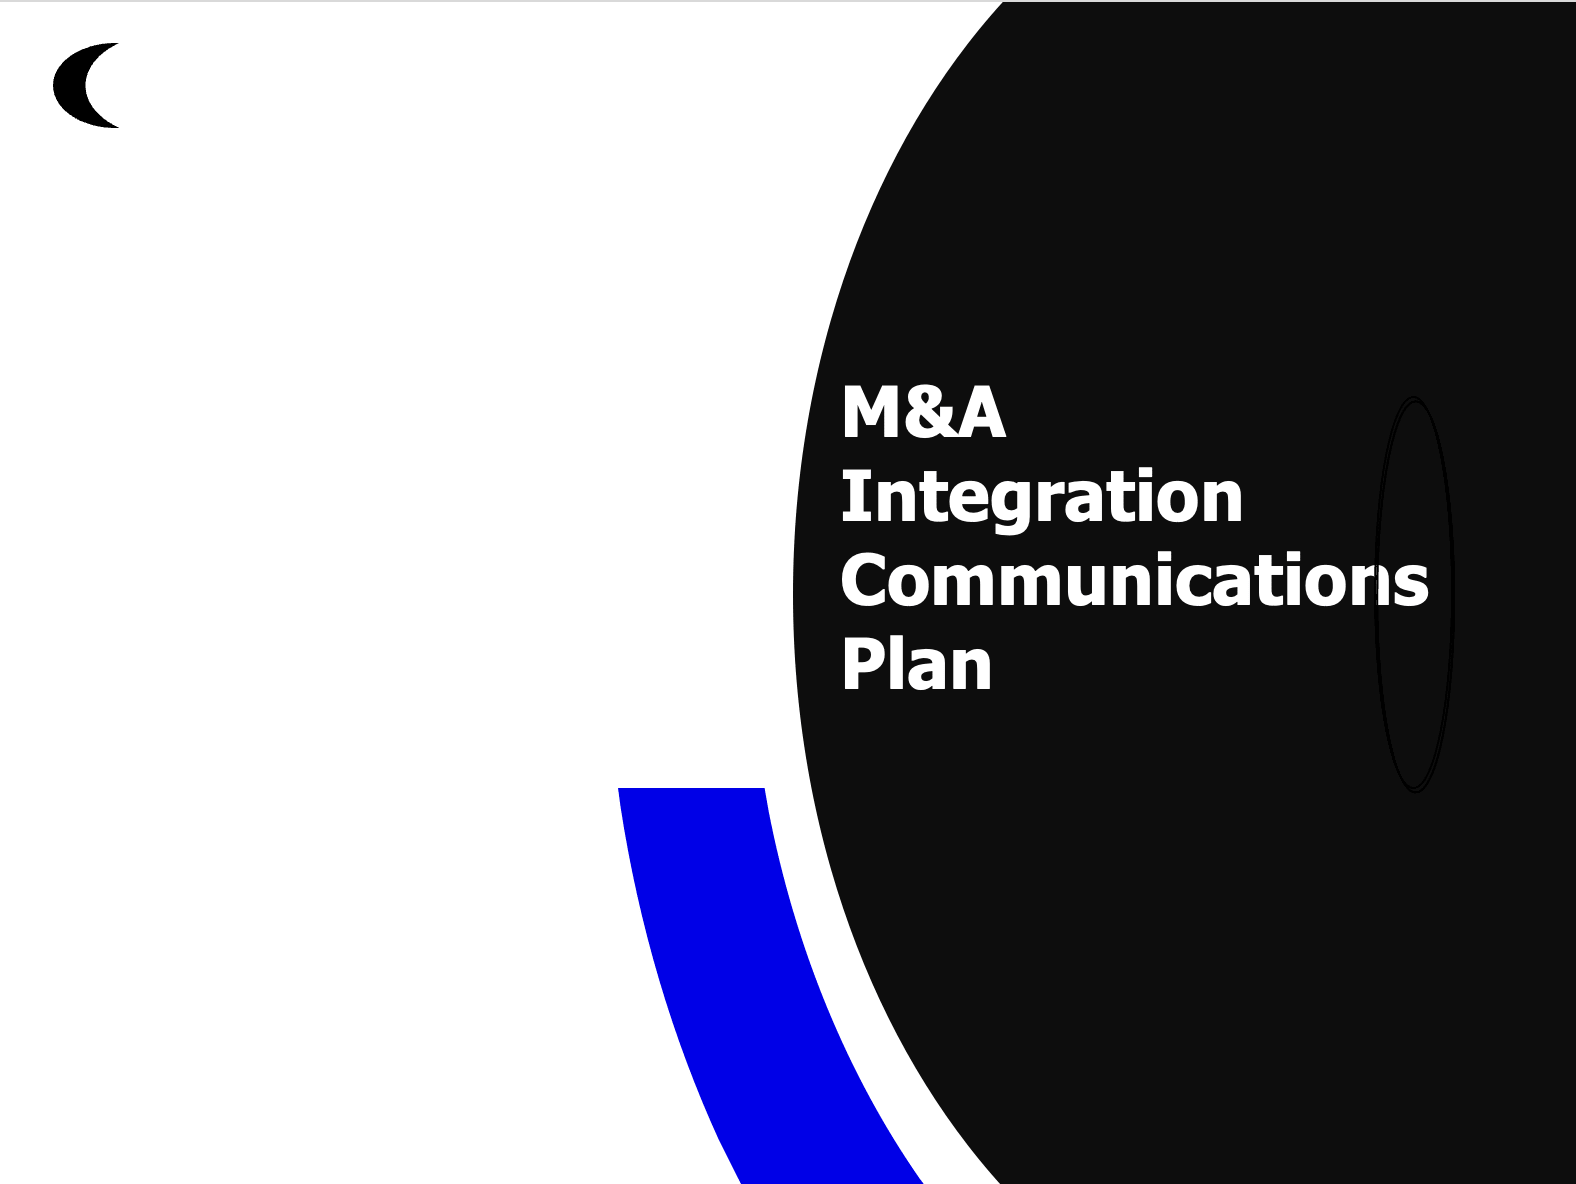 M&A Integration Communications Plan